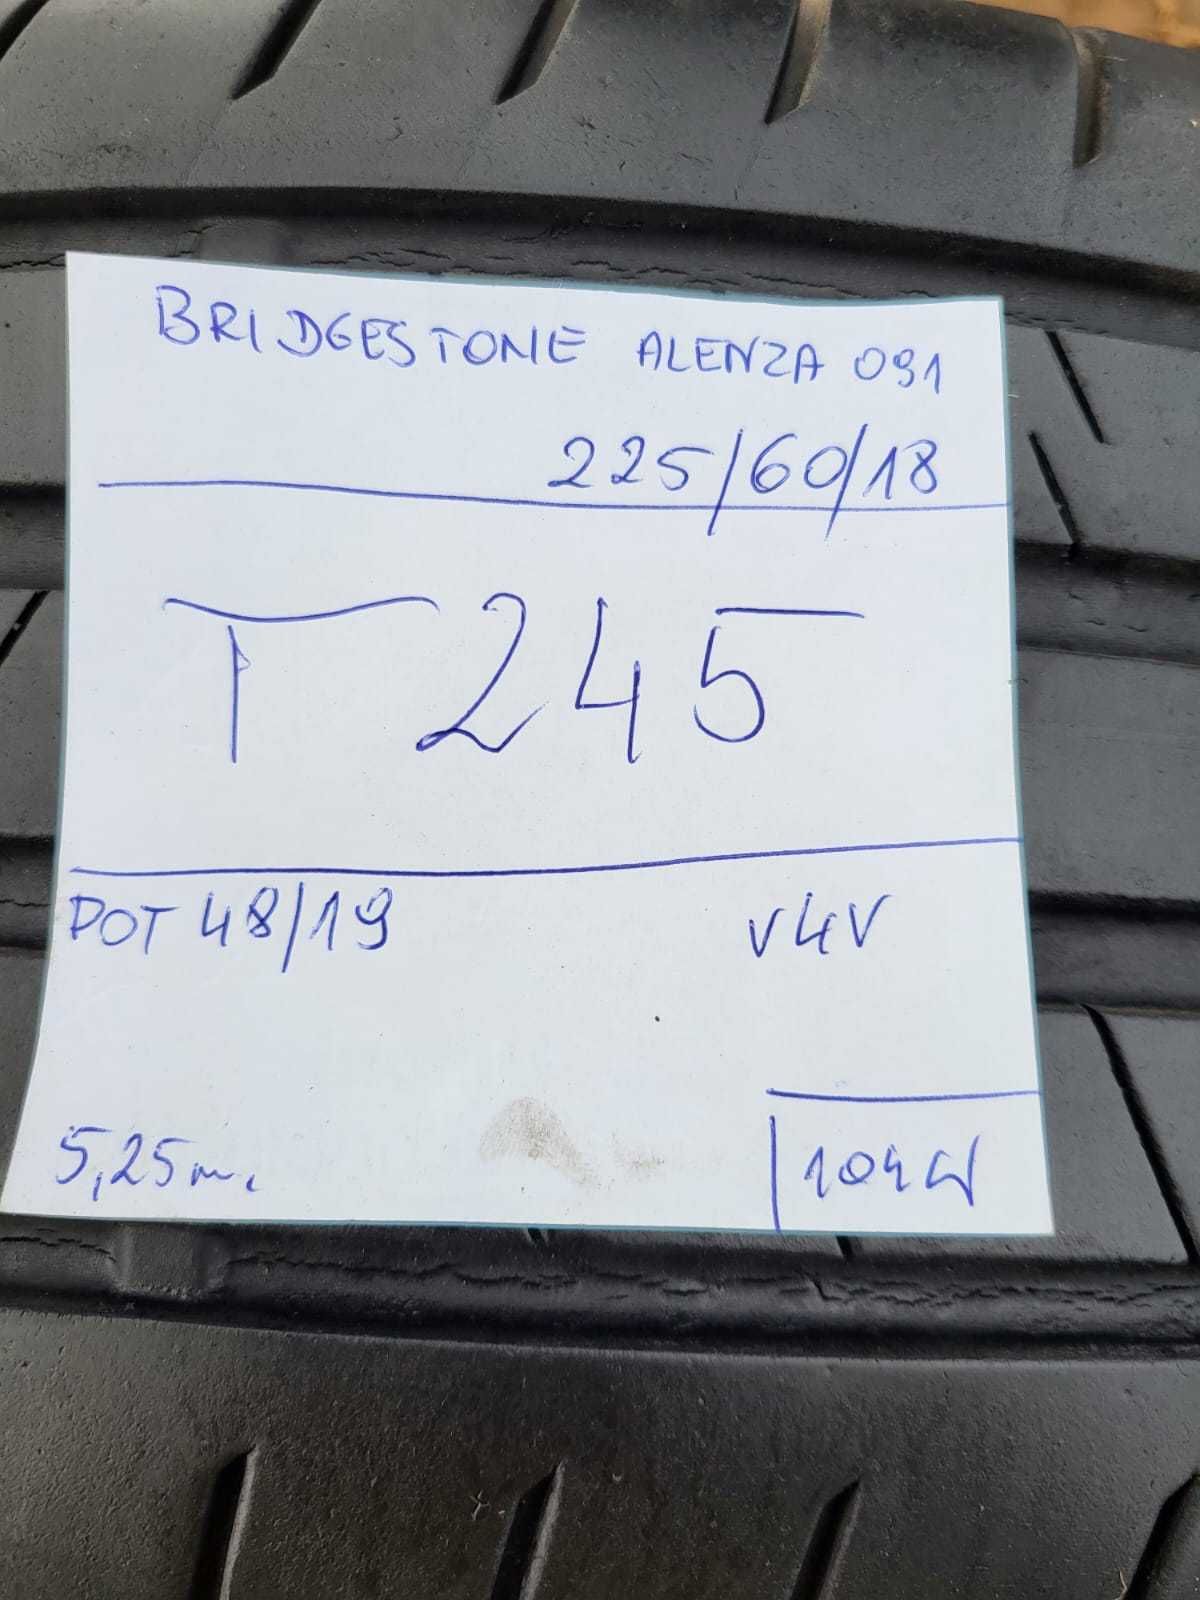 Bridgestone 225/60 r18 Alenza 001 /// 5,25mm!!! DOT 4819 Gwarancja